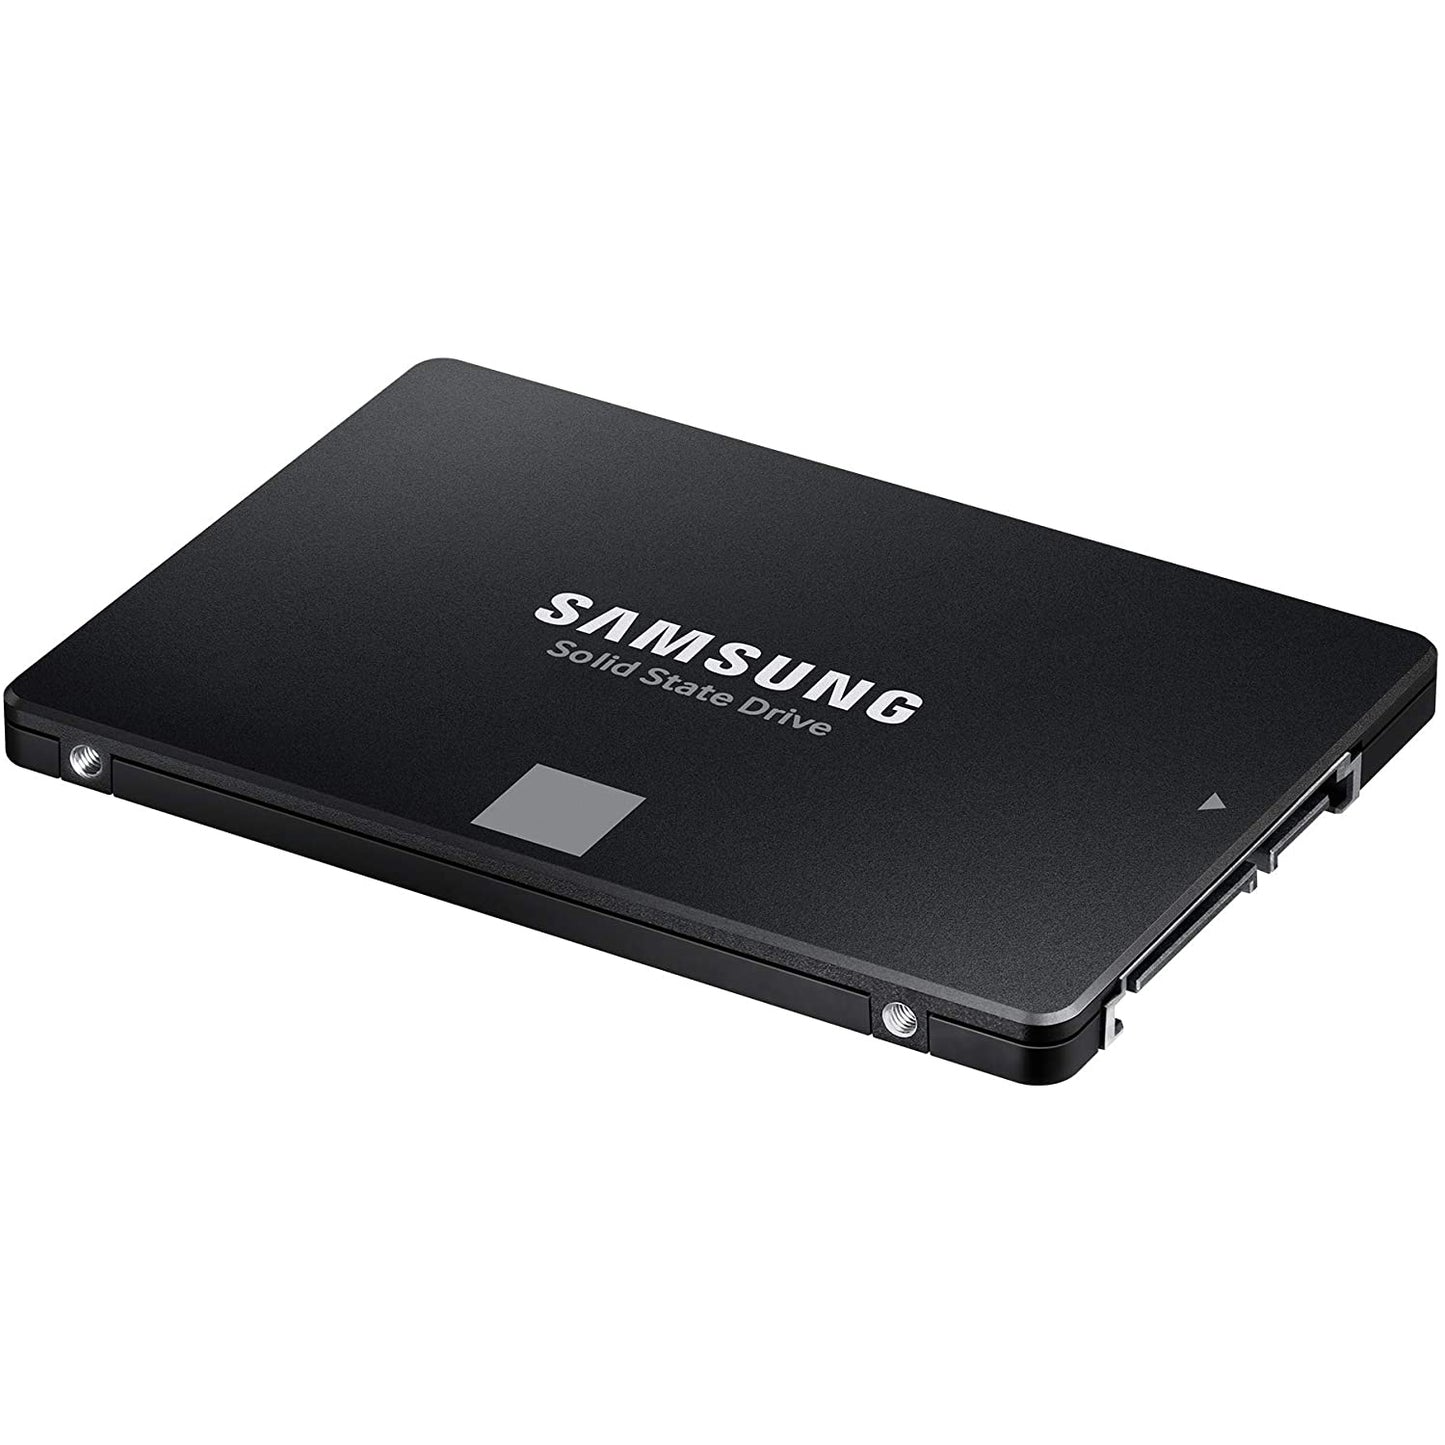 Samsung 870 EVO 500GB SSD 2.5" SATA III Solid State Drive, 560MB/s Read 530MB/s Write